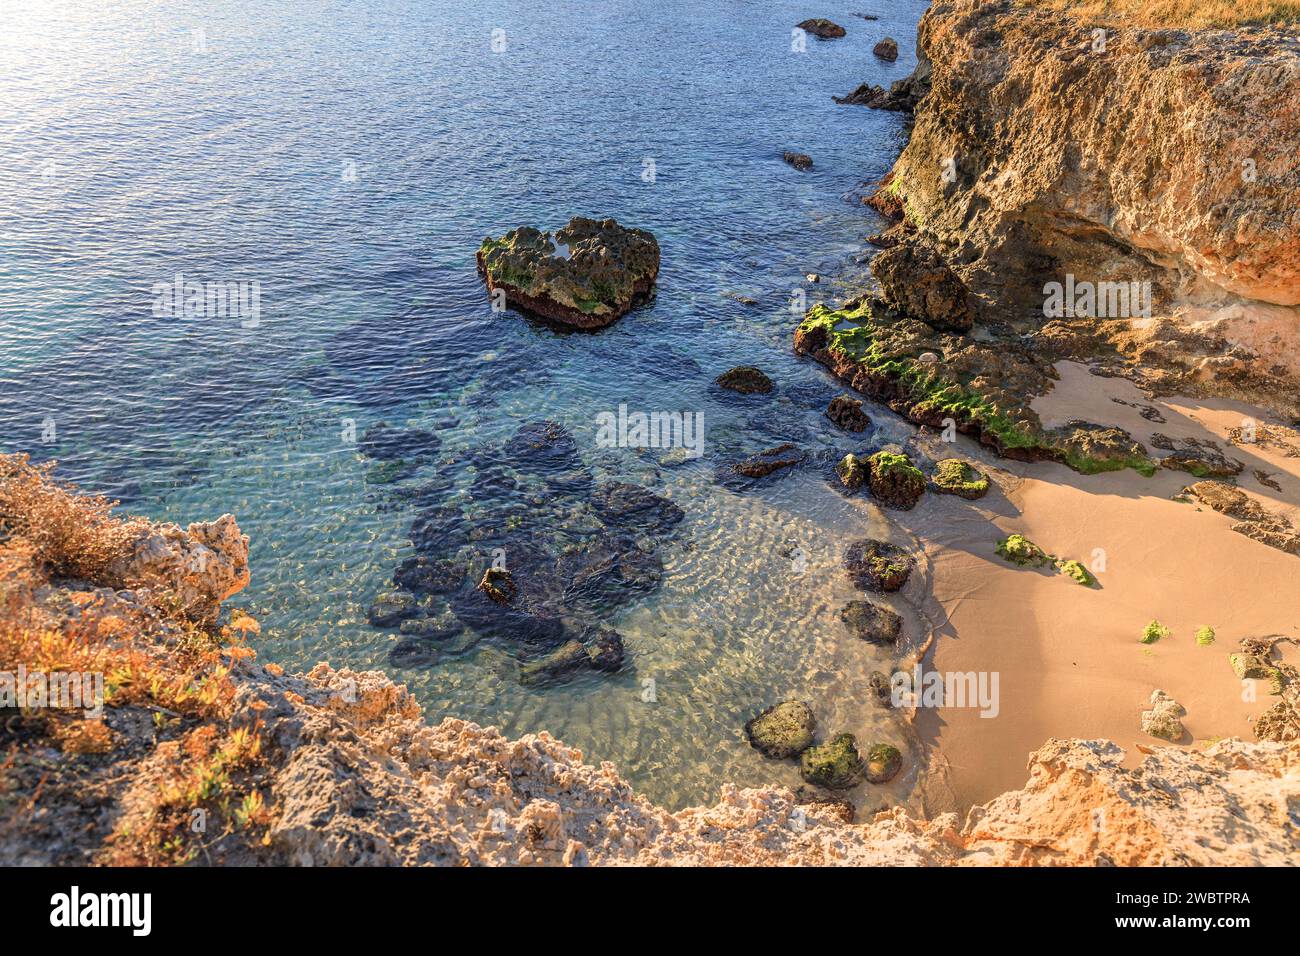 The most beautiful Apulian coast in Italy: Cala Corvino. Typical coastline near Monopoli : high and rocky coast characterized by small sandy coves. Stock Photo